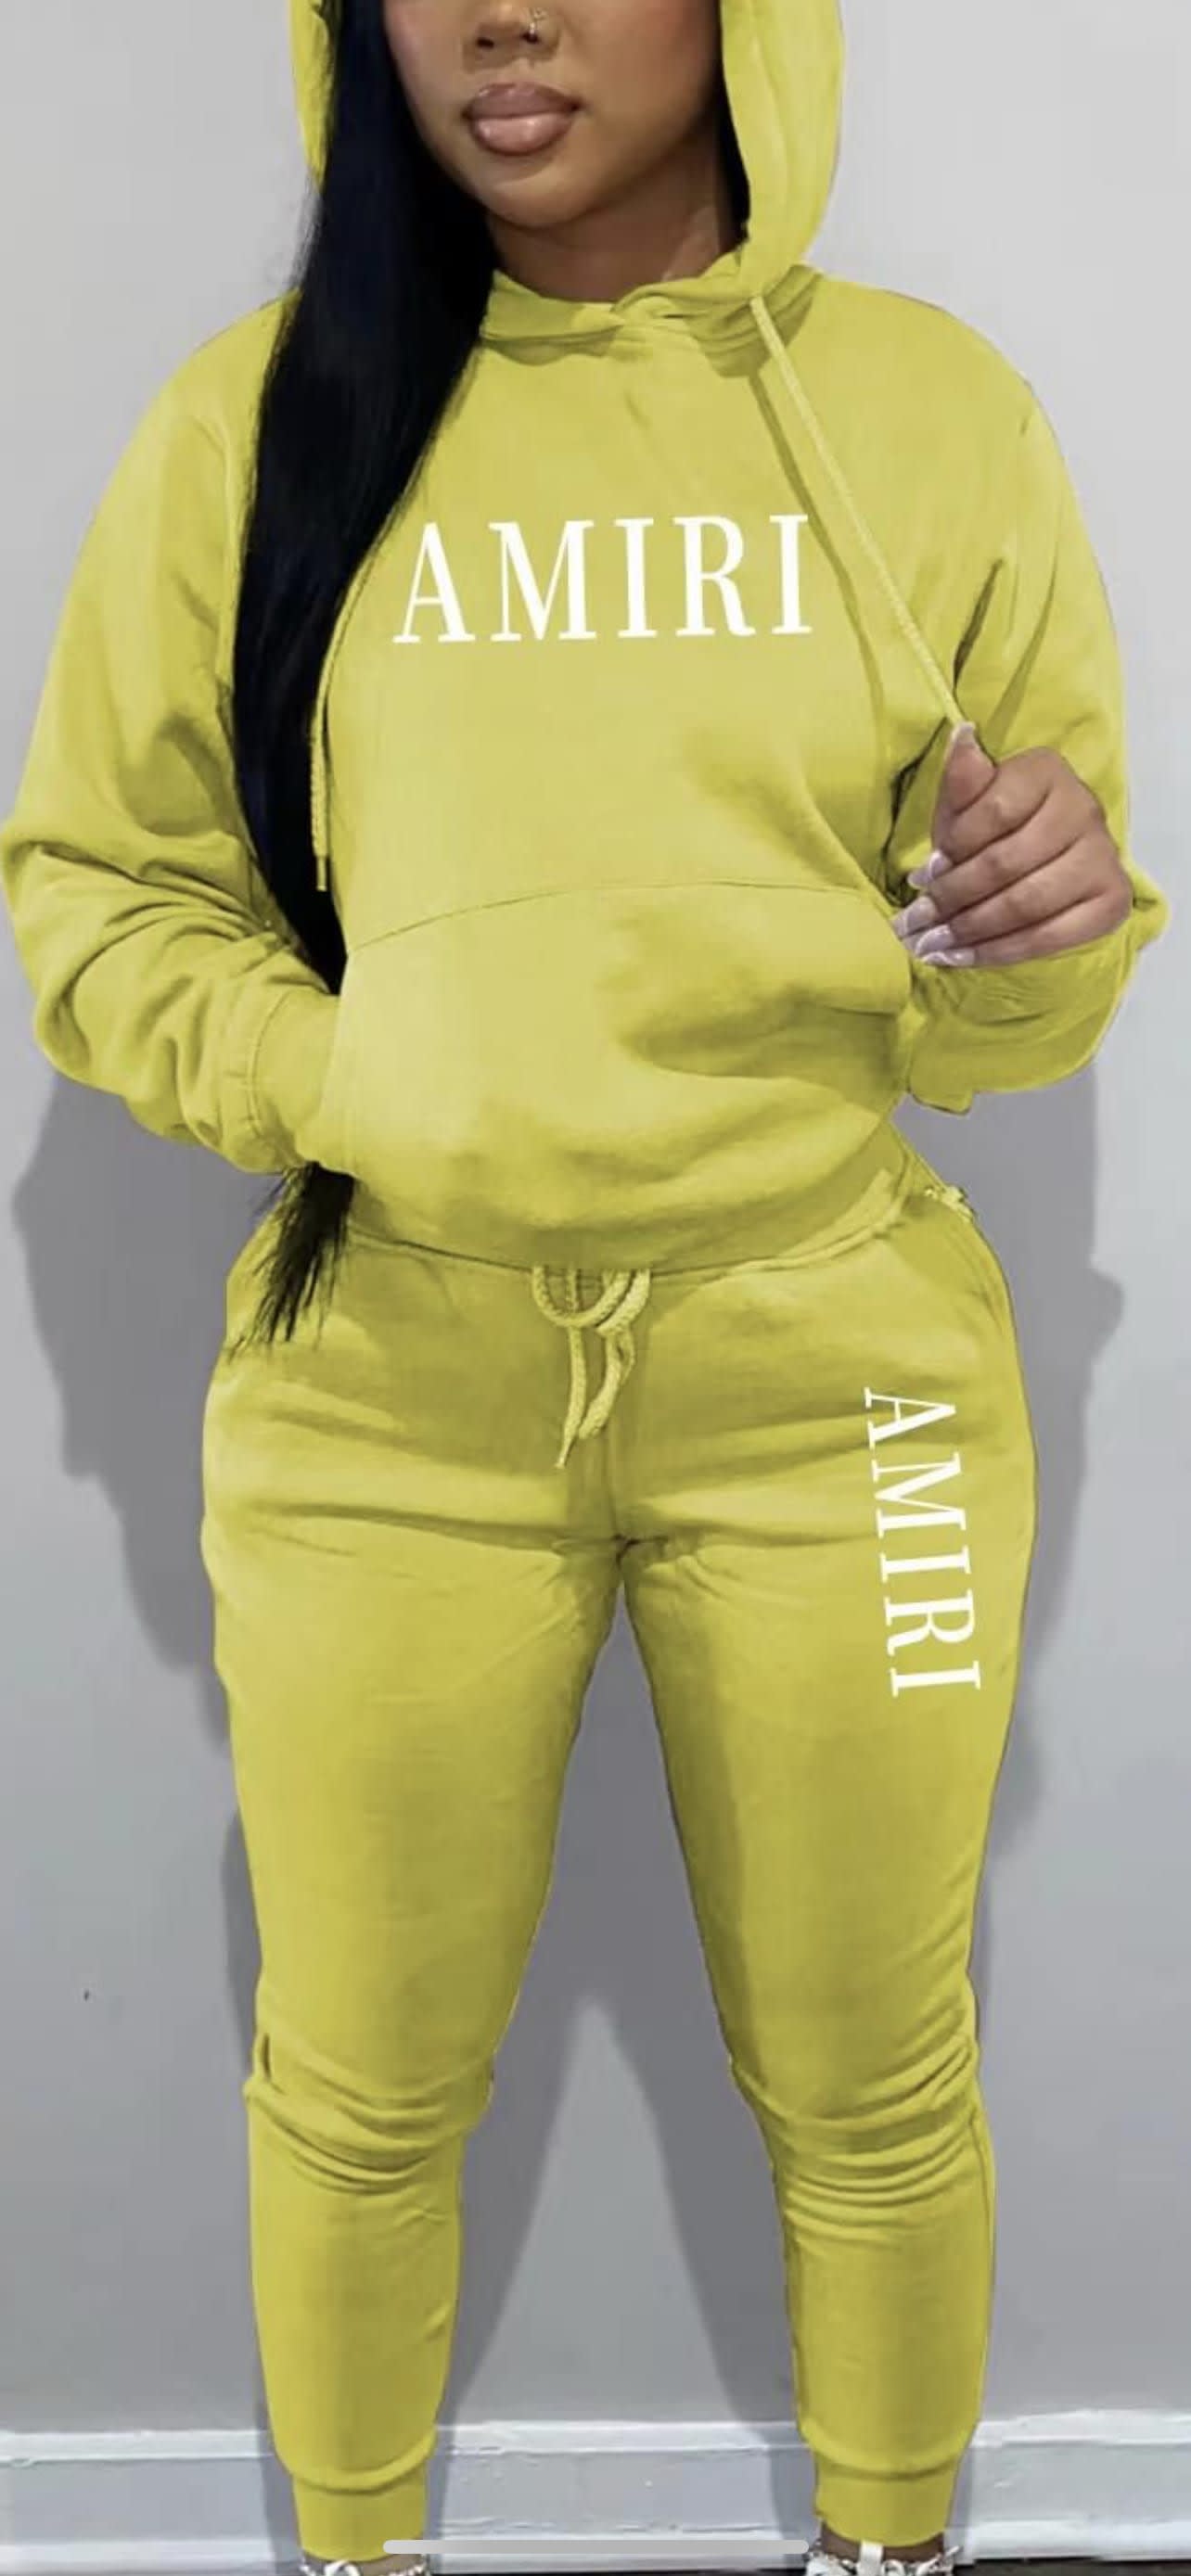 AMIRI Hoodie and Pants (Yellow) - Clothing - A Rich Boss's Closet